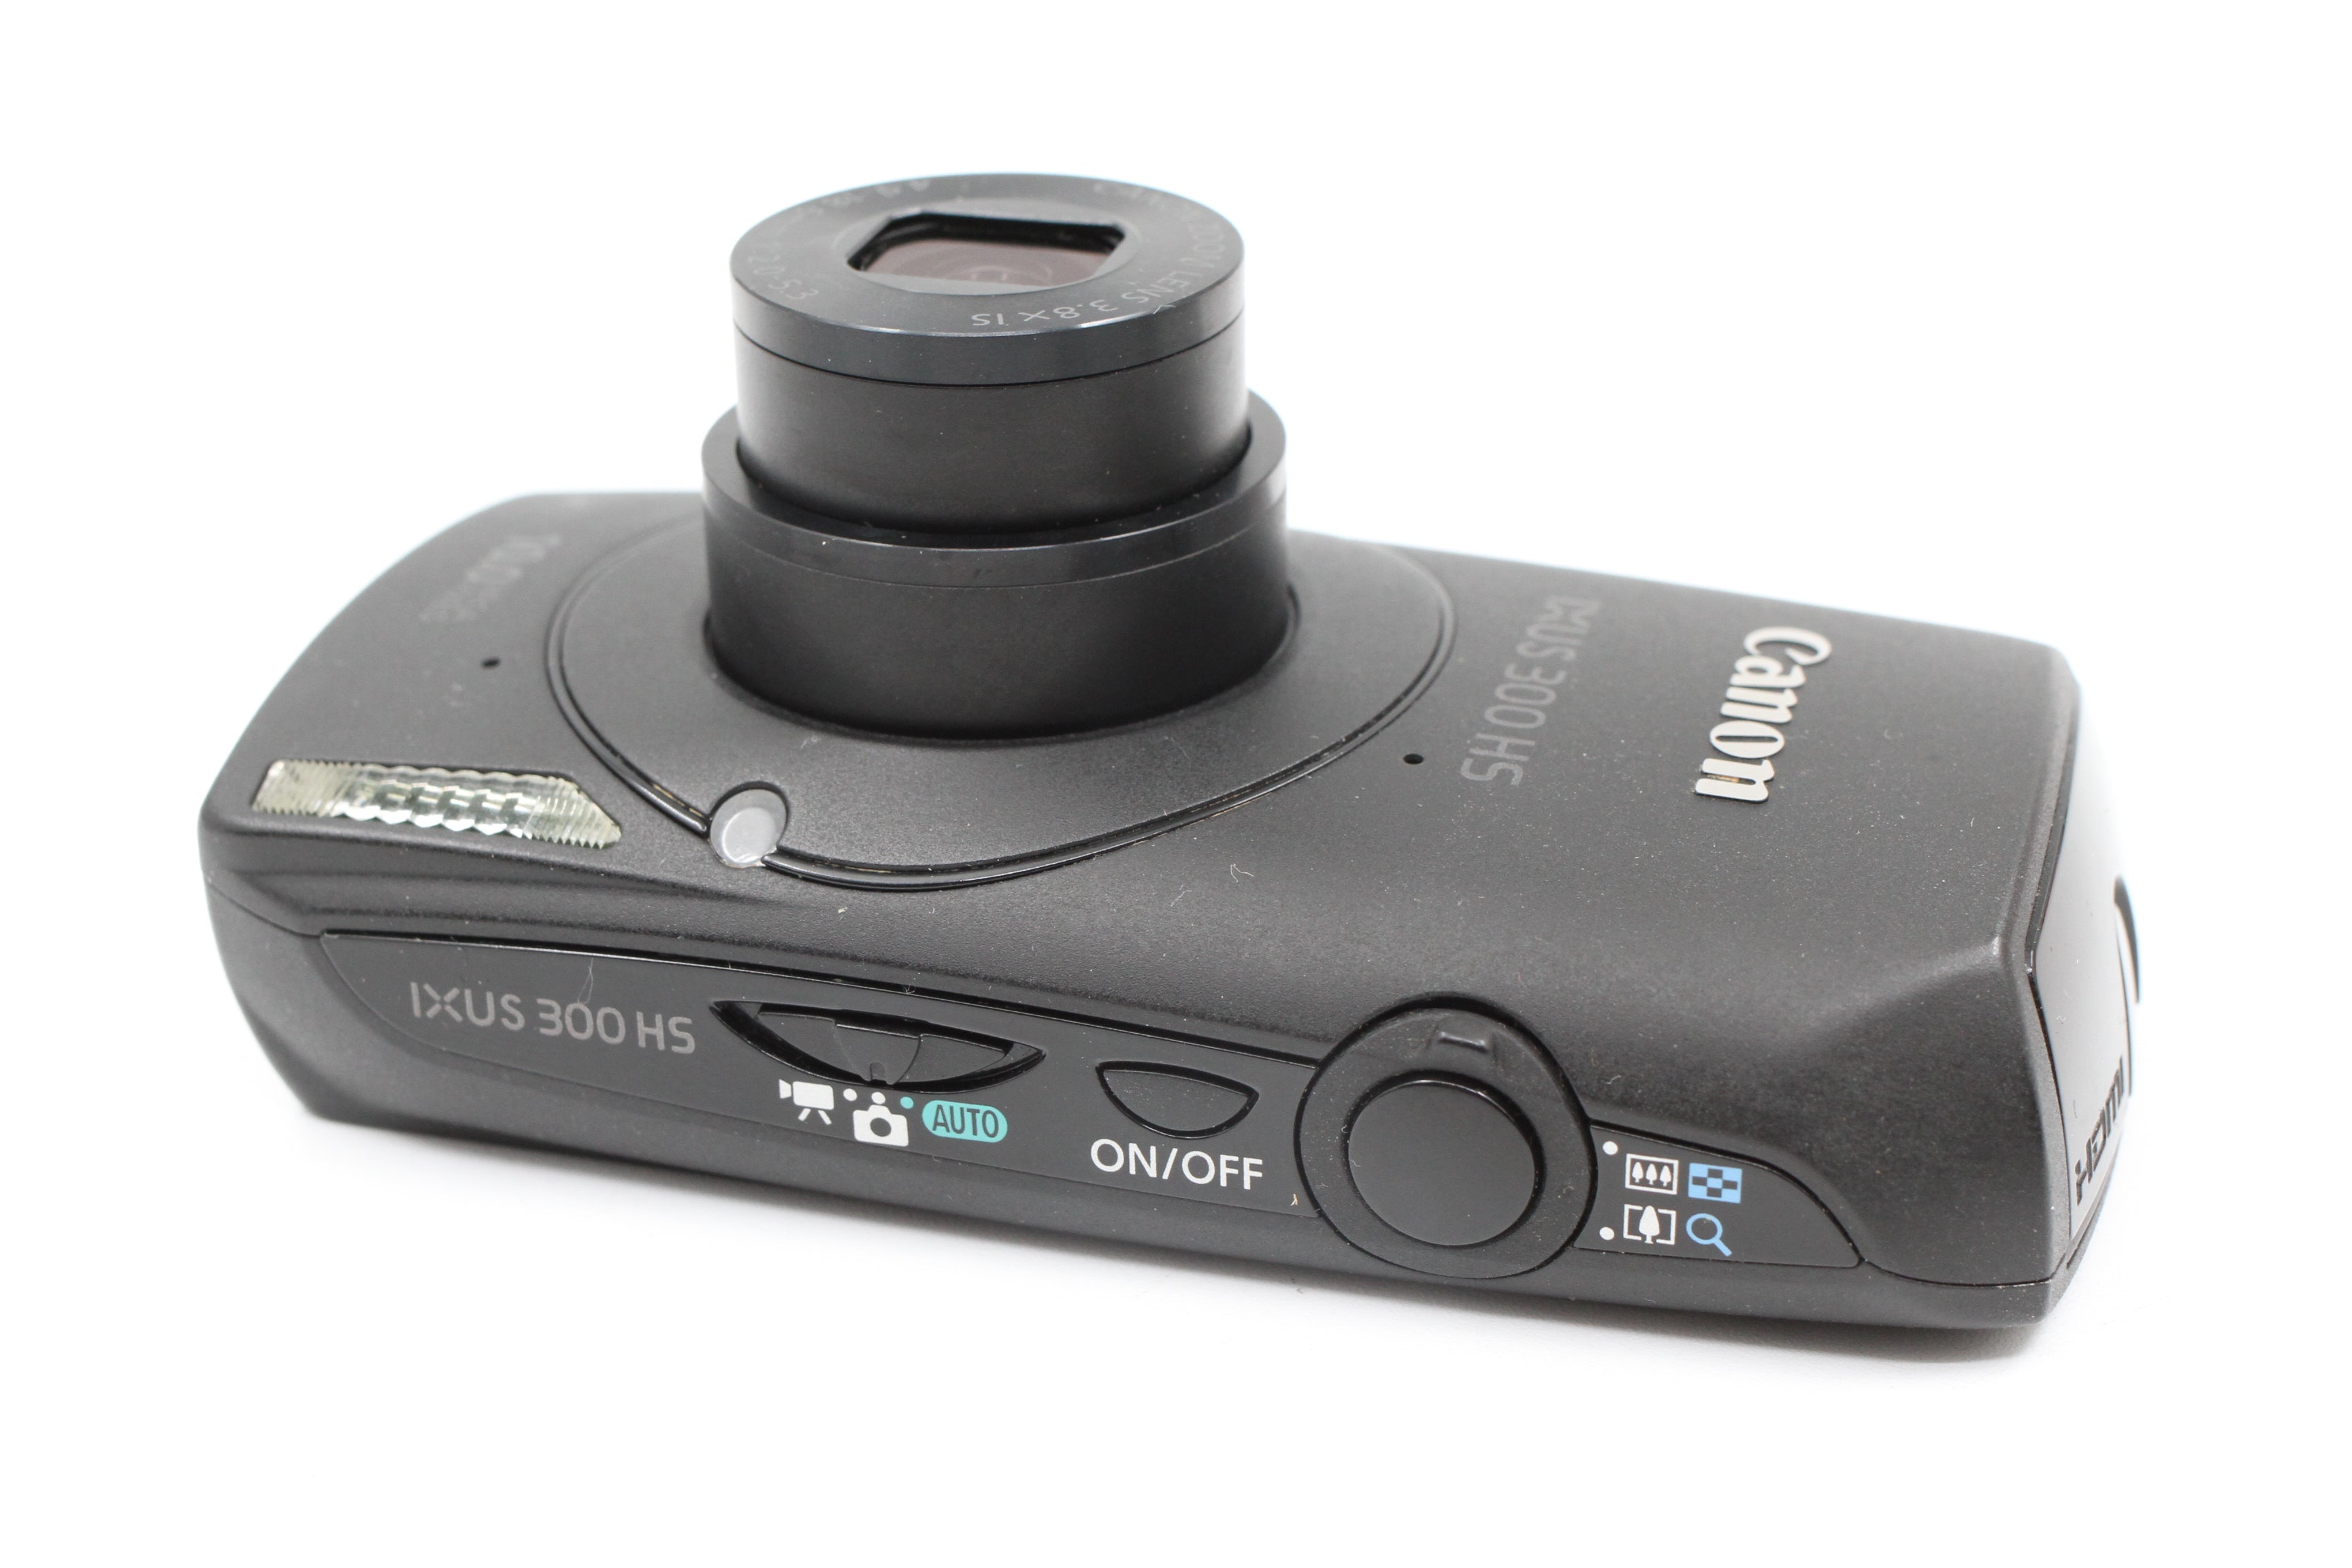 Canon Powershot IXUS 300 IS 10.0mp Digital Compact Camera